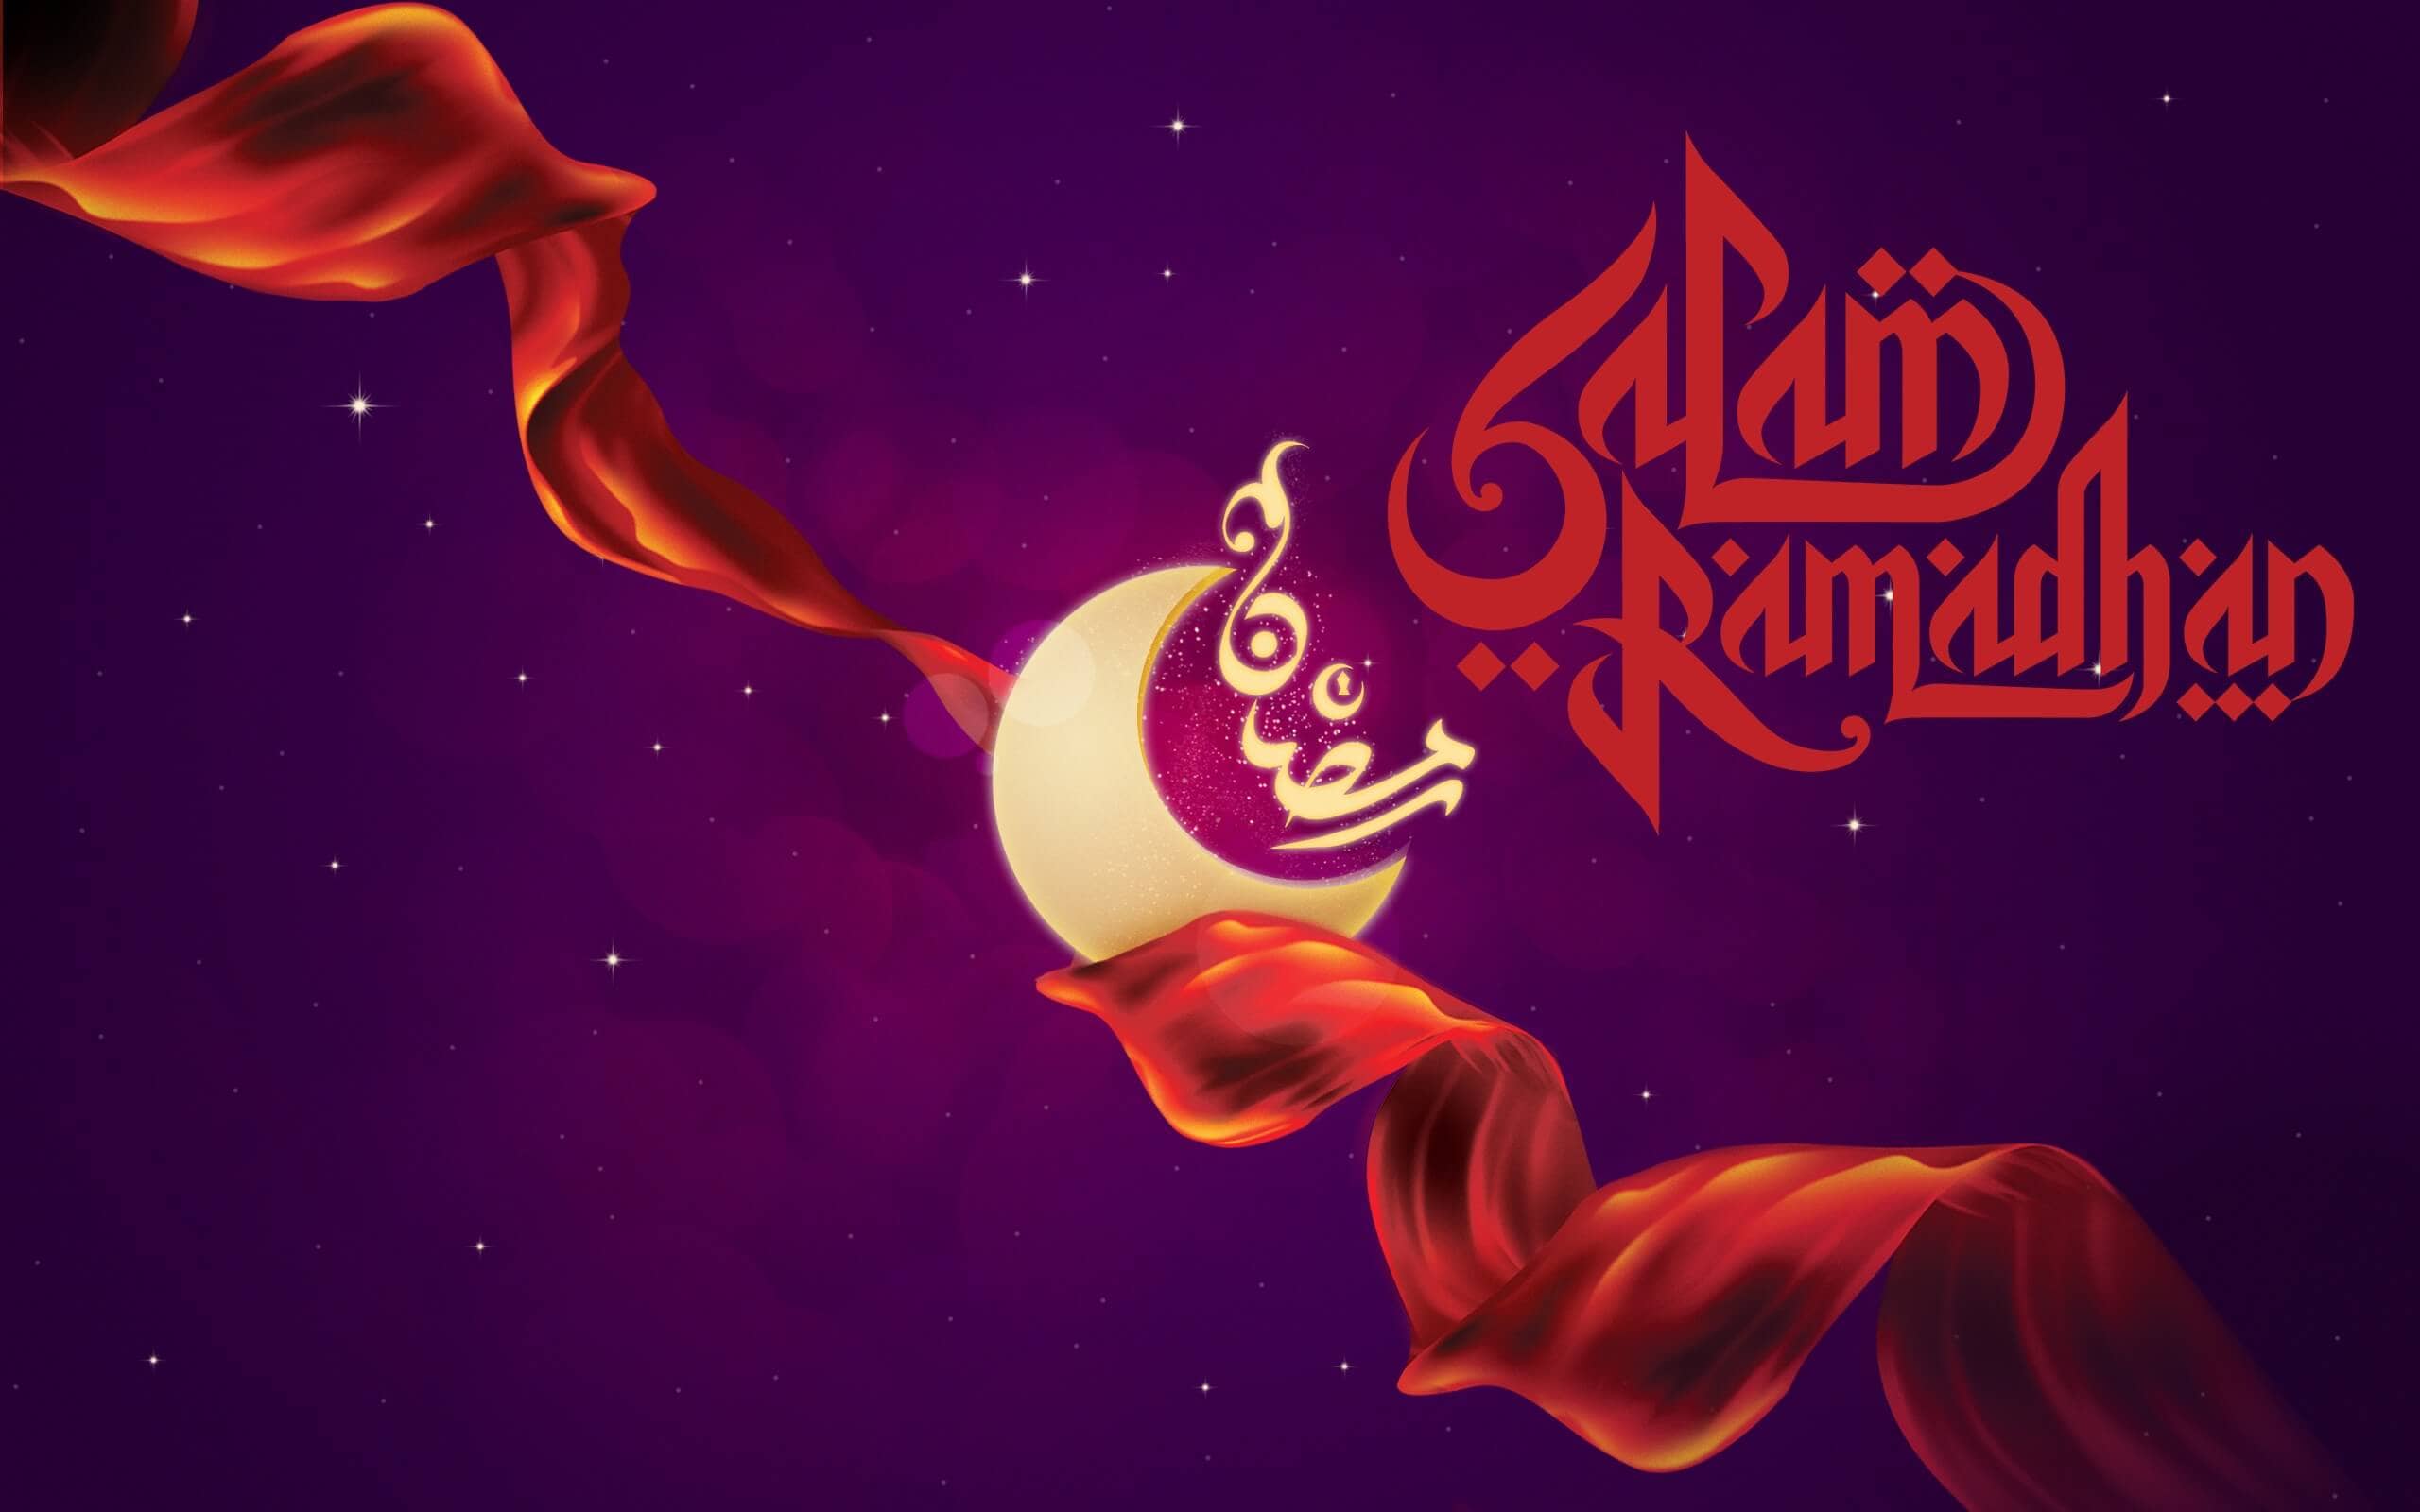 Ramadan Mubarak Wallpaper -k Background Download [80 HD]